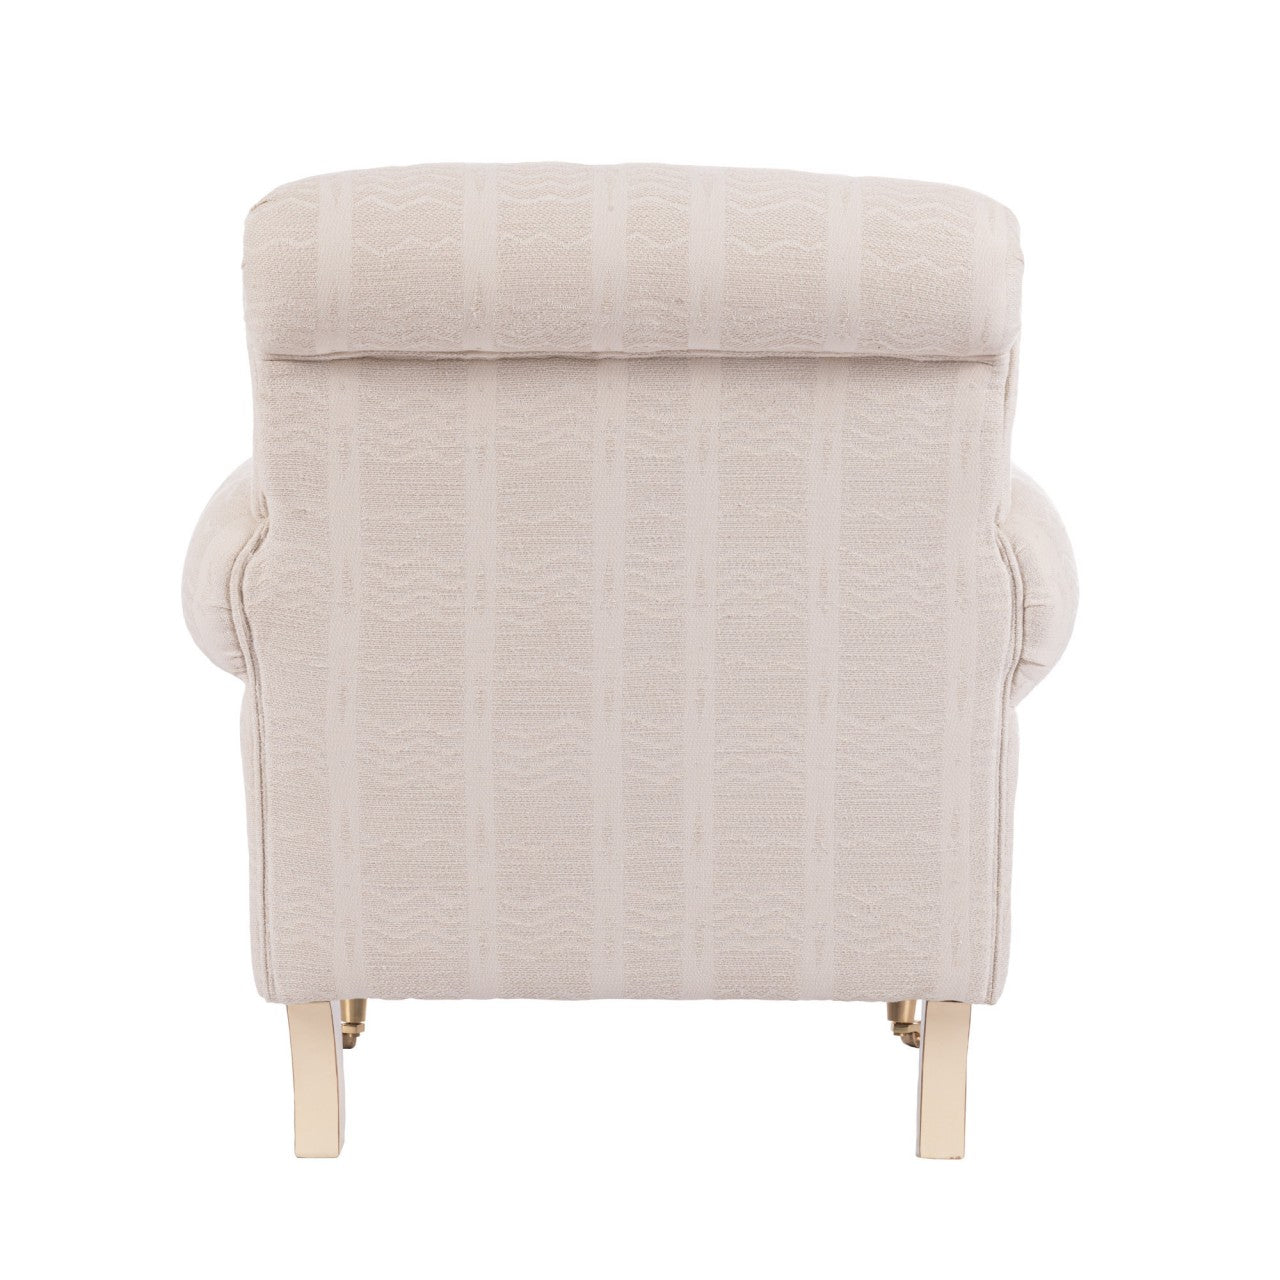 KINGSTON CHAIR - WHITELAKE Jacquard Woven Fabric_Furniture_Mindthegap